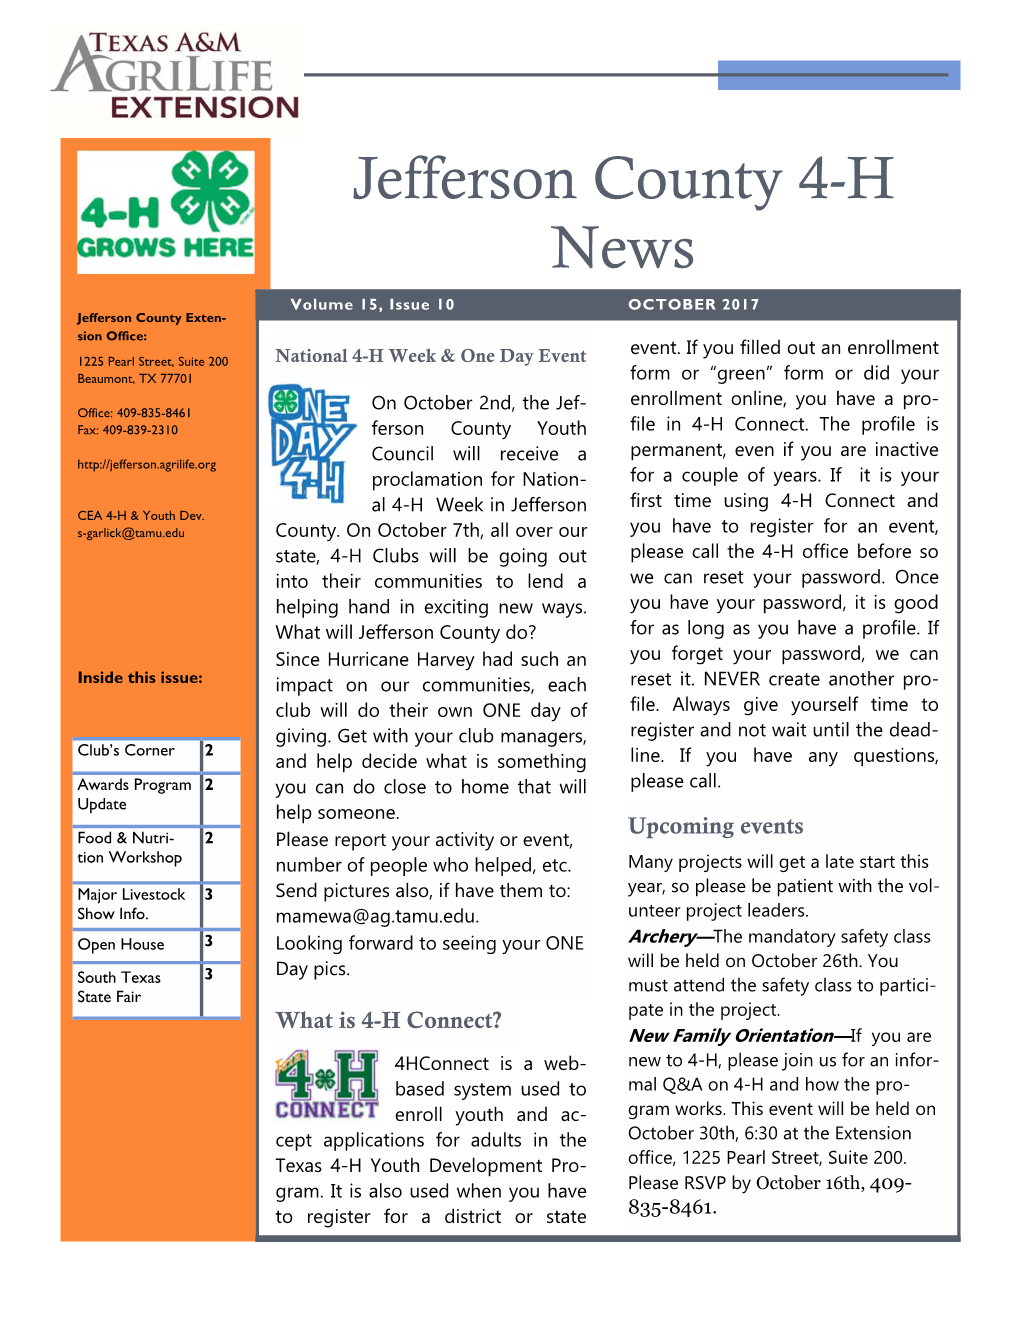 Jefferson County 4-H News